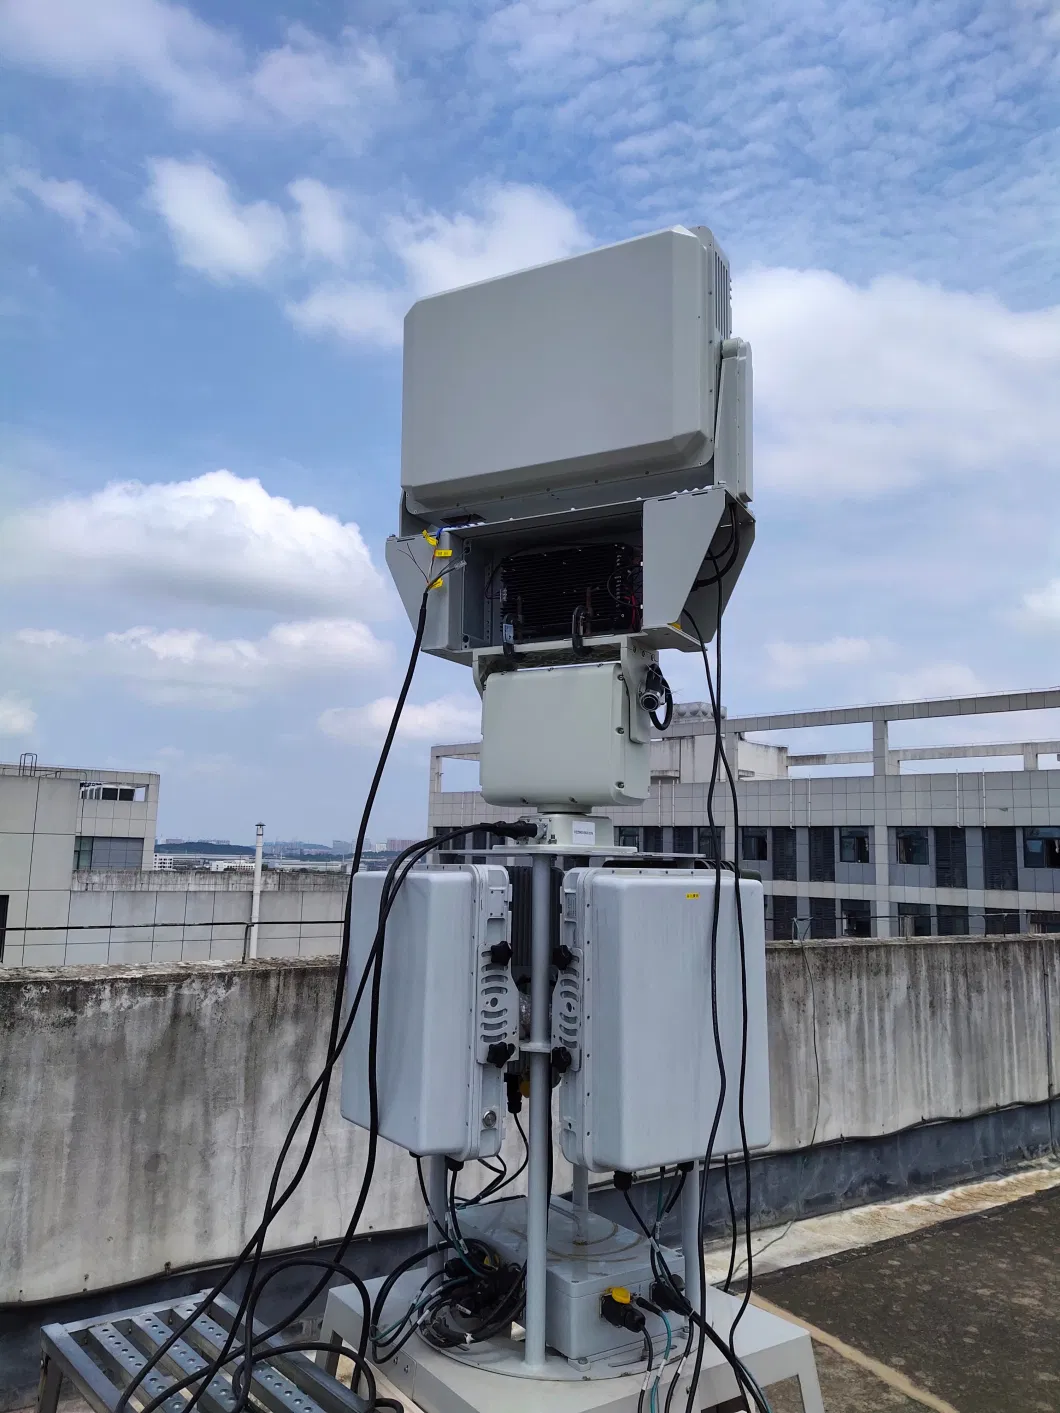 S Band Coordinates Ground Guard Radar Detector